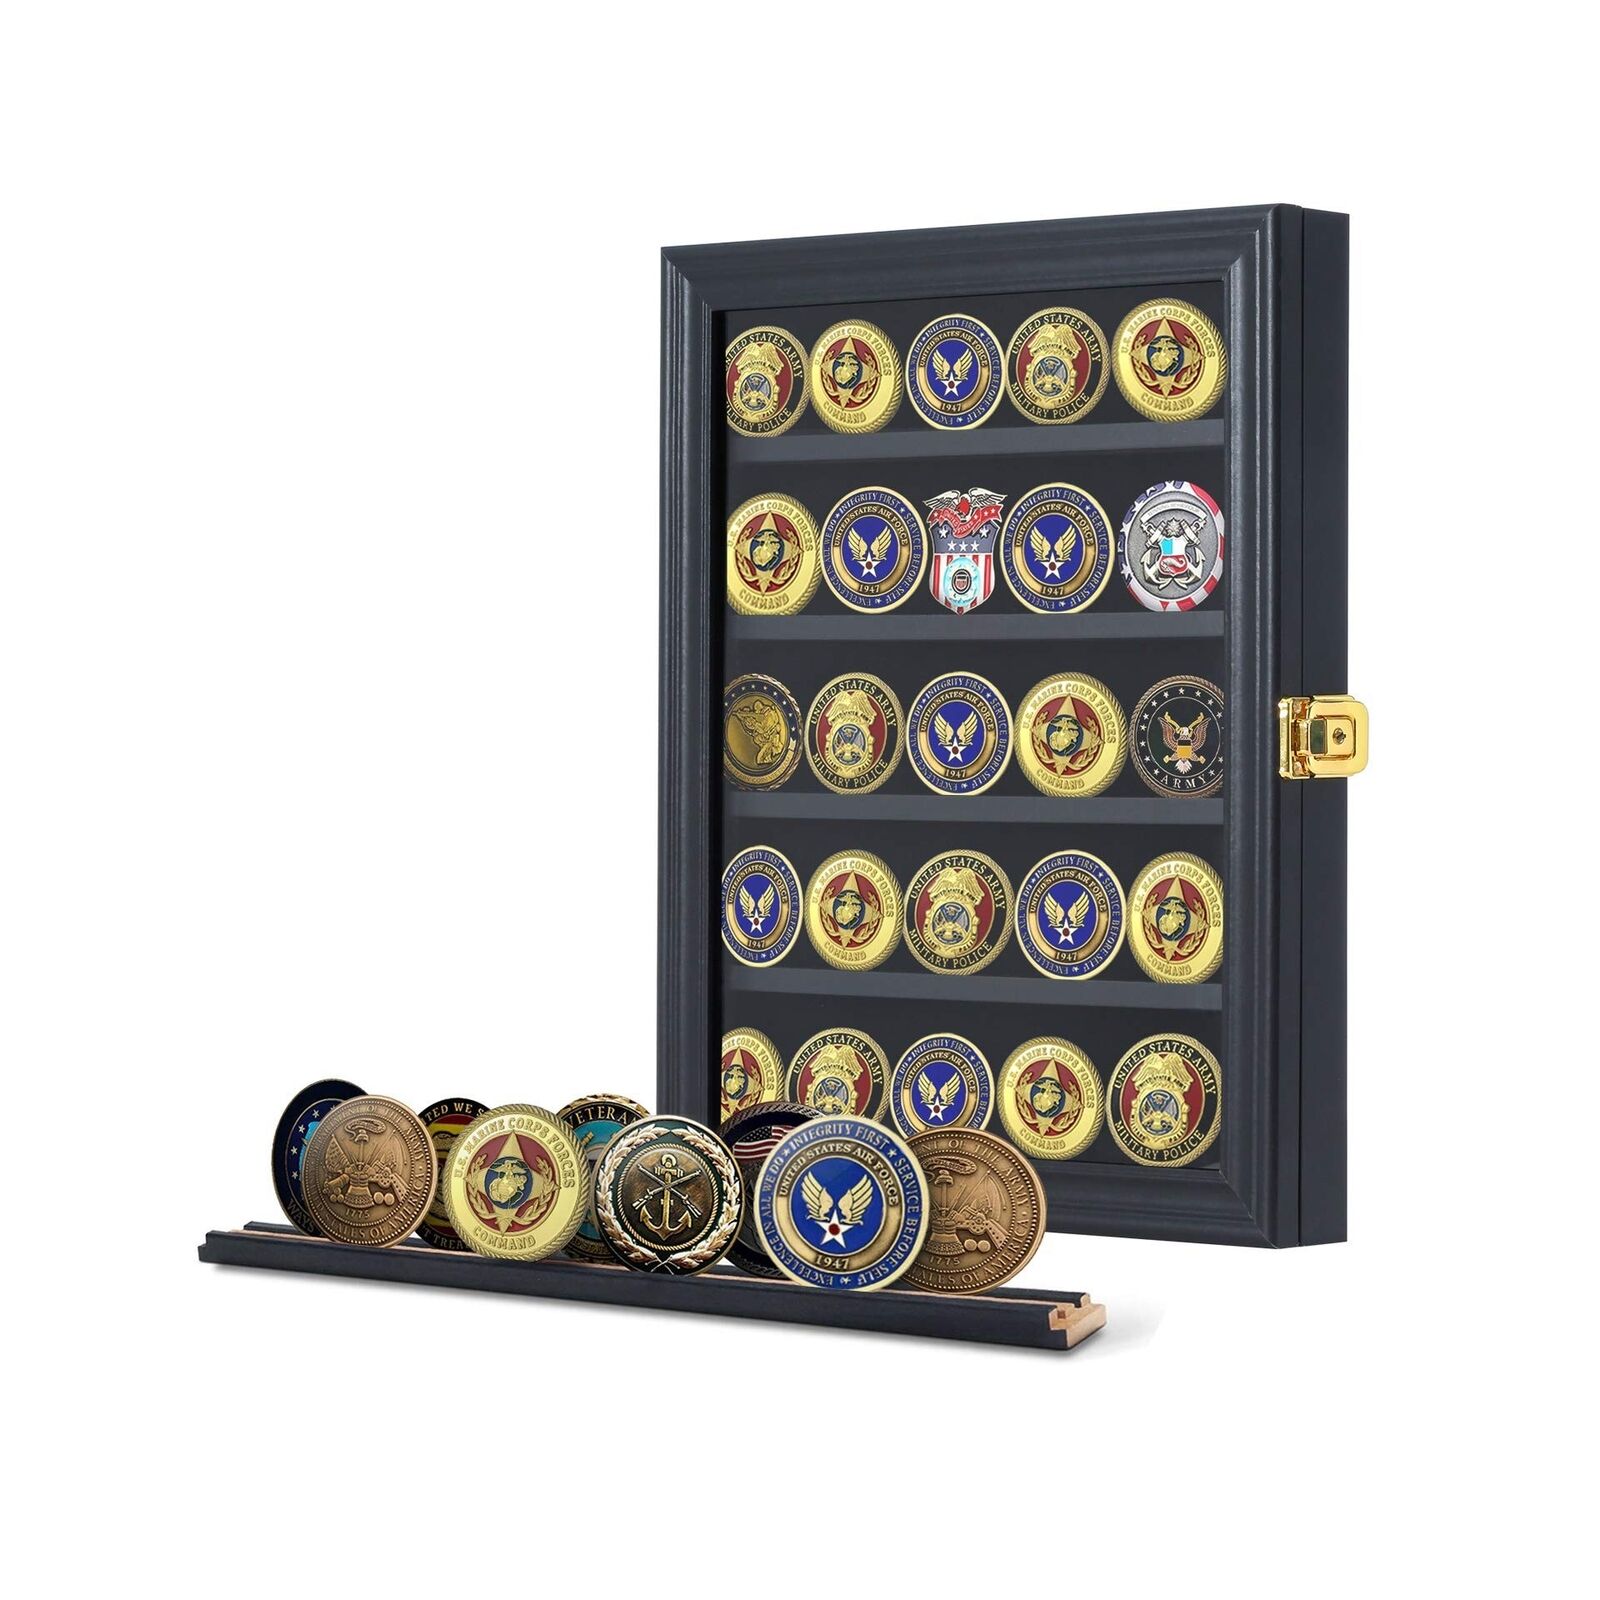 Jinchuan Military Challenge Coin Display Case Lockable Cabinet Rack Holder Sh...